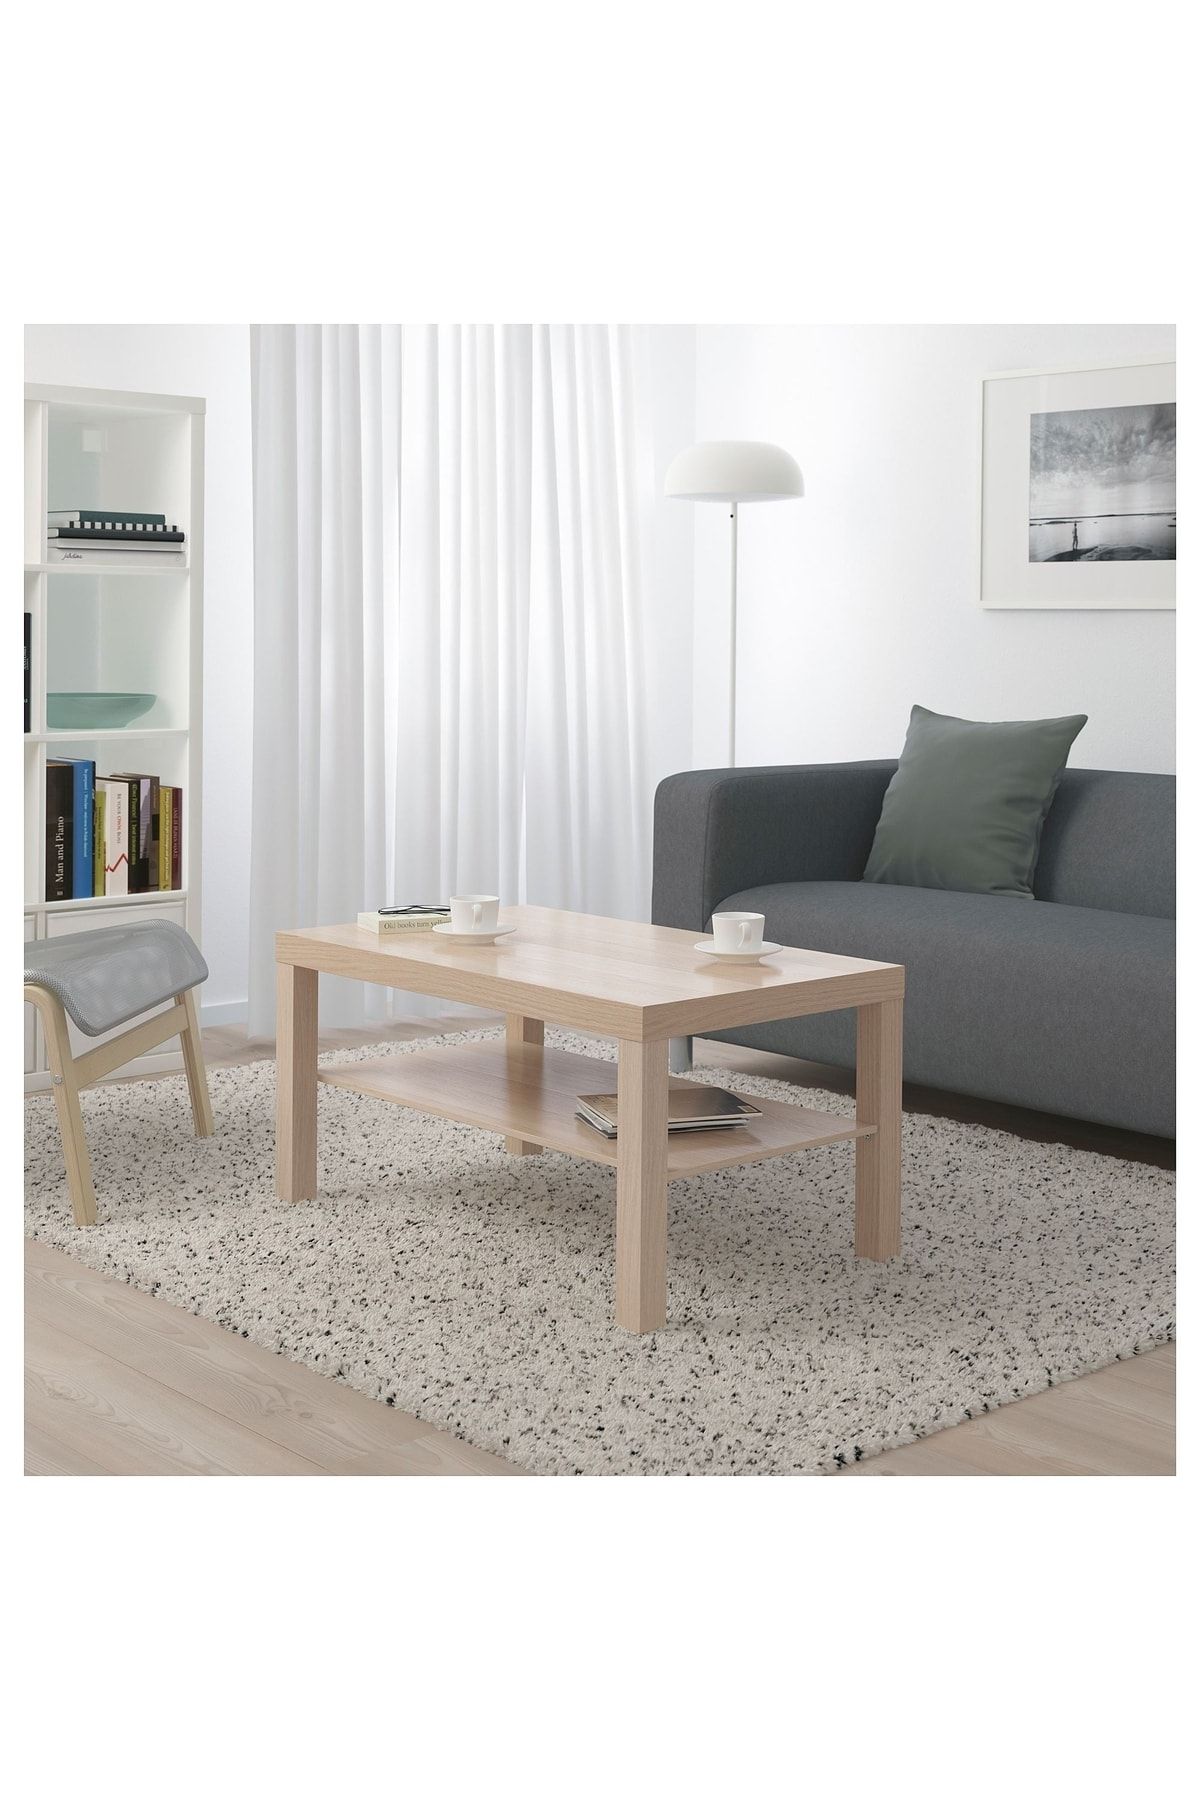 IKEA Dekoratif Lack Orta Sehpa Mobilya Meşe Renkli (55x90 Cm)